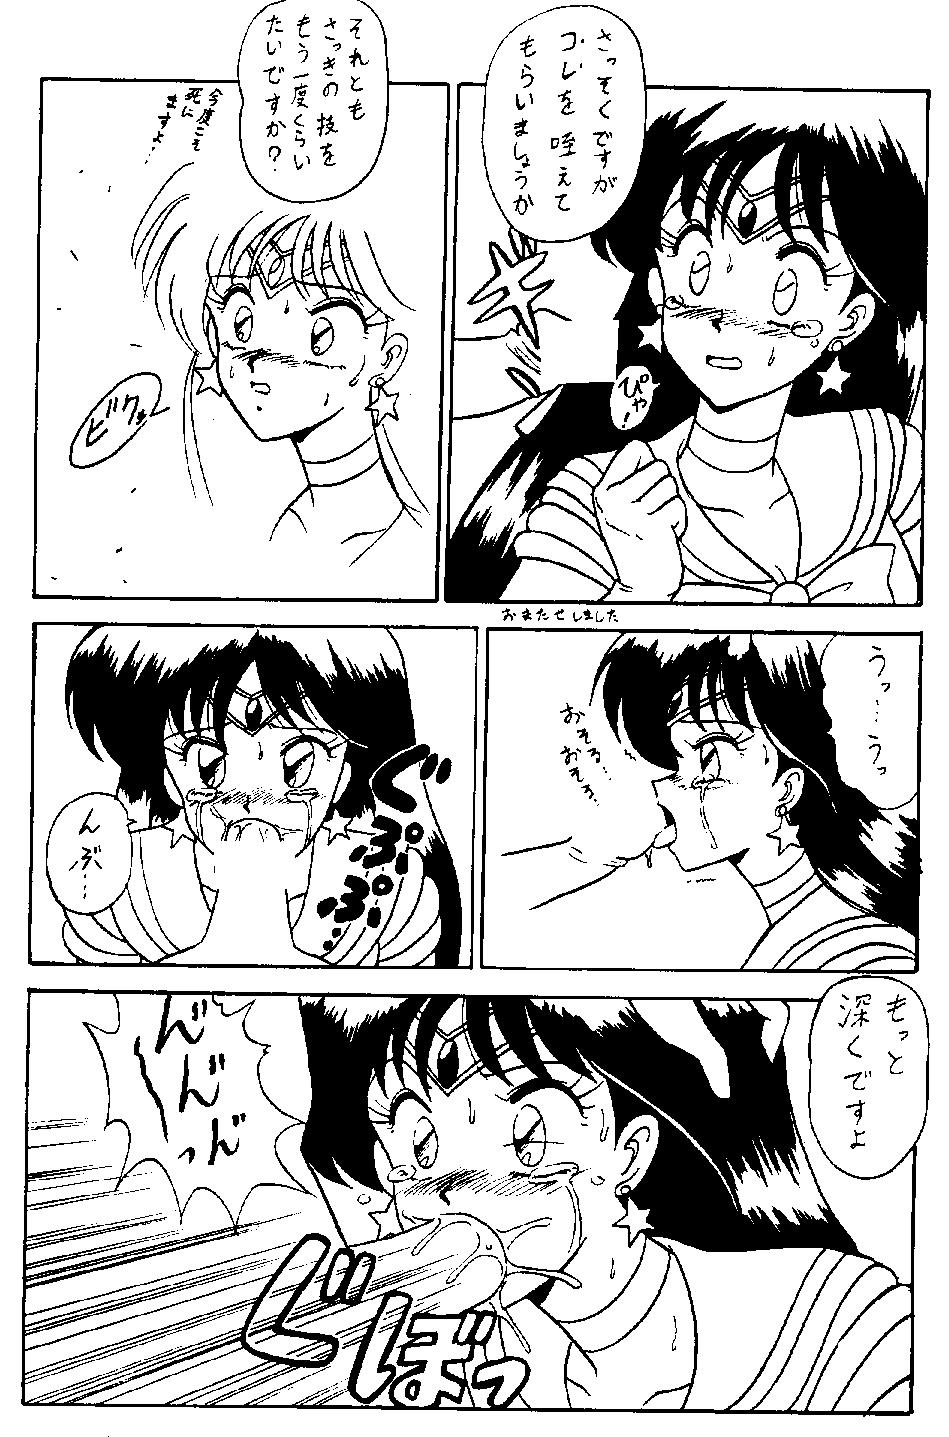 Ex Gf mitca - Sailor moon Handjob - Page 6